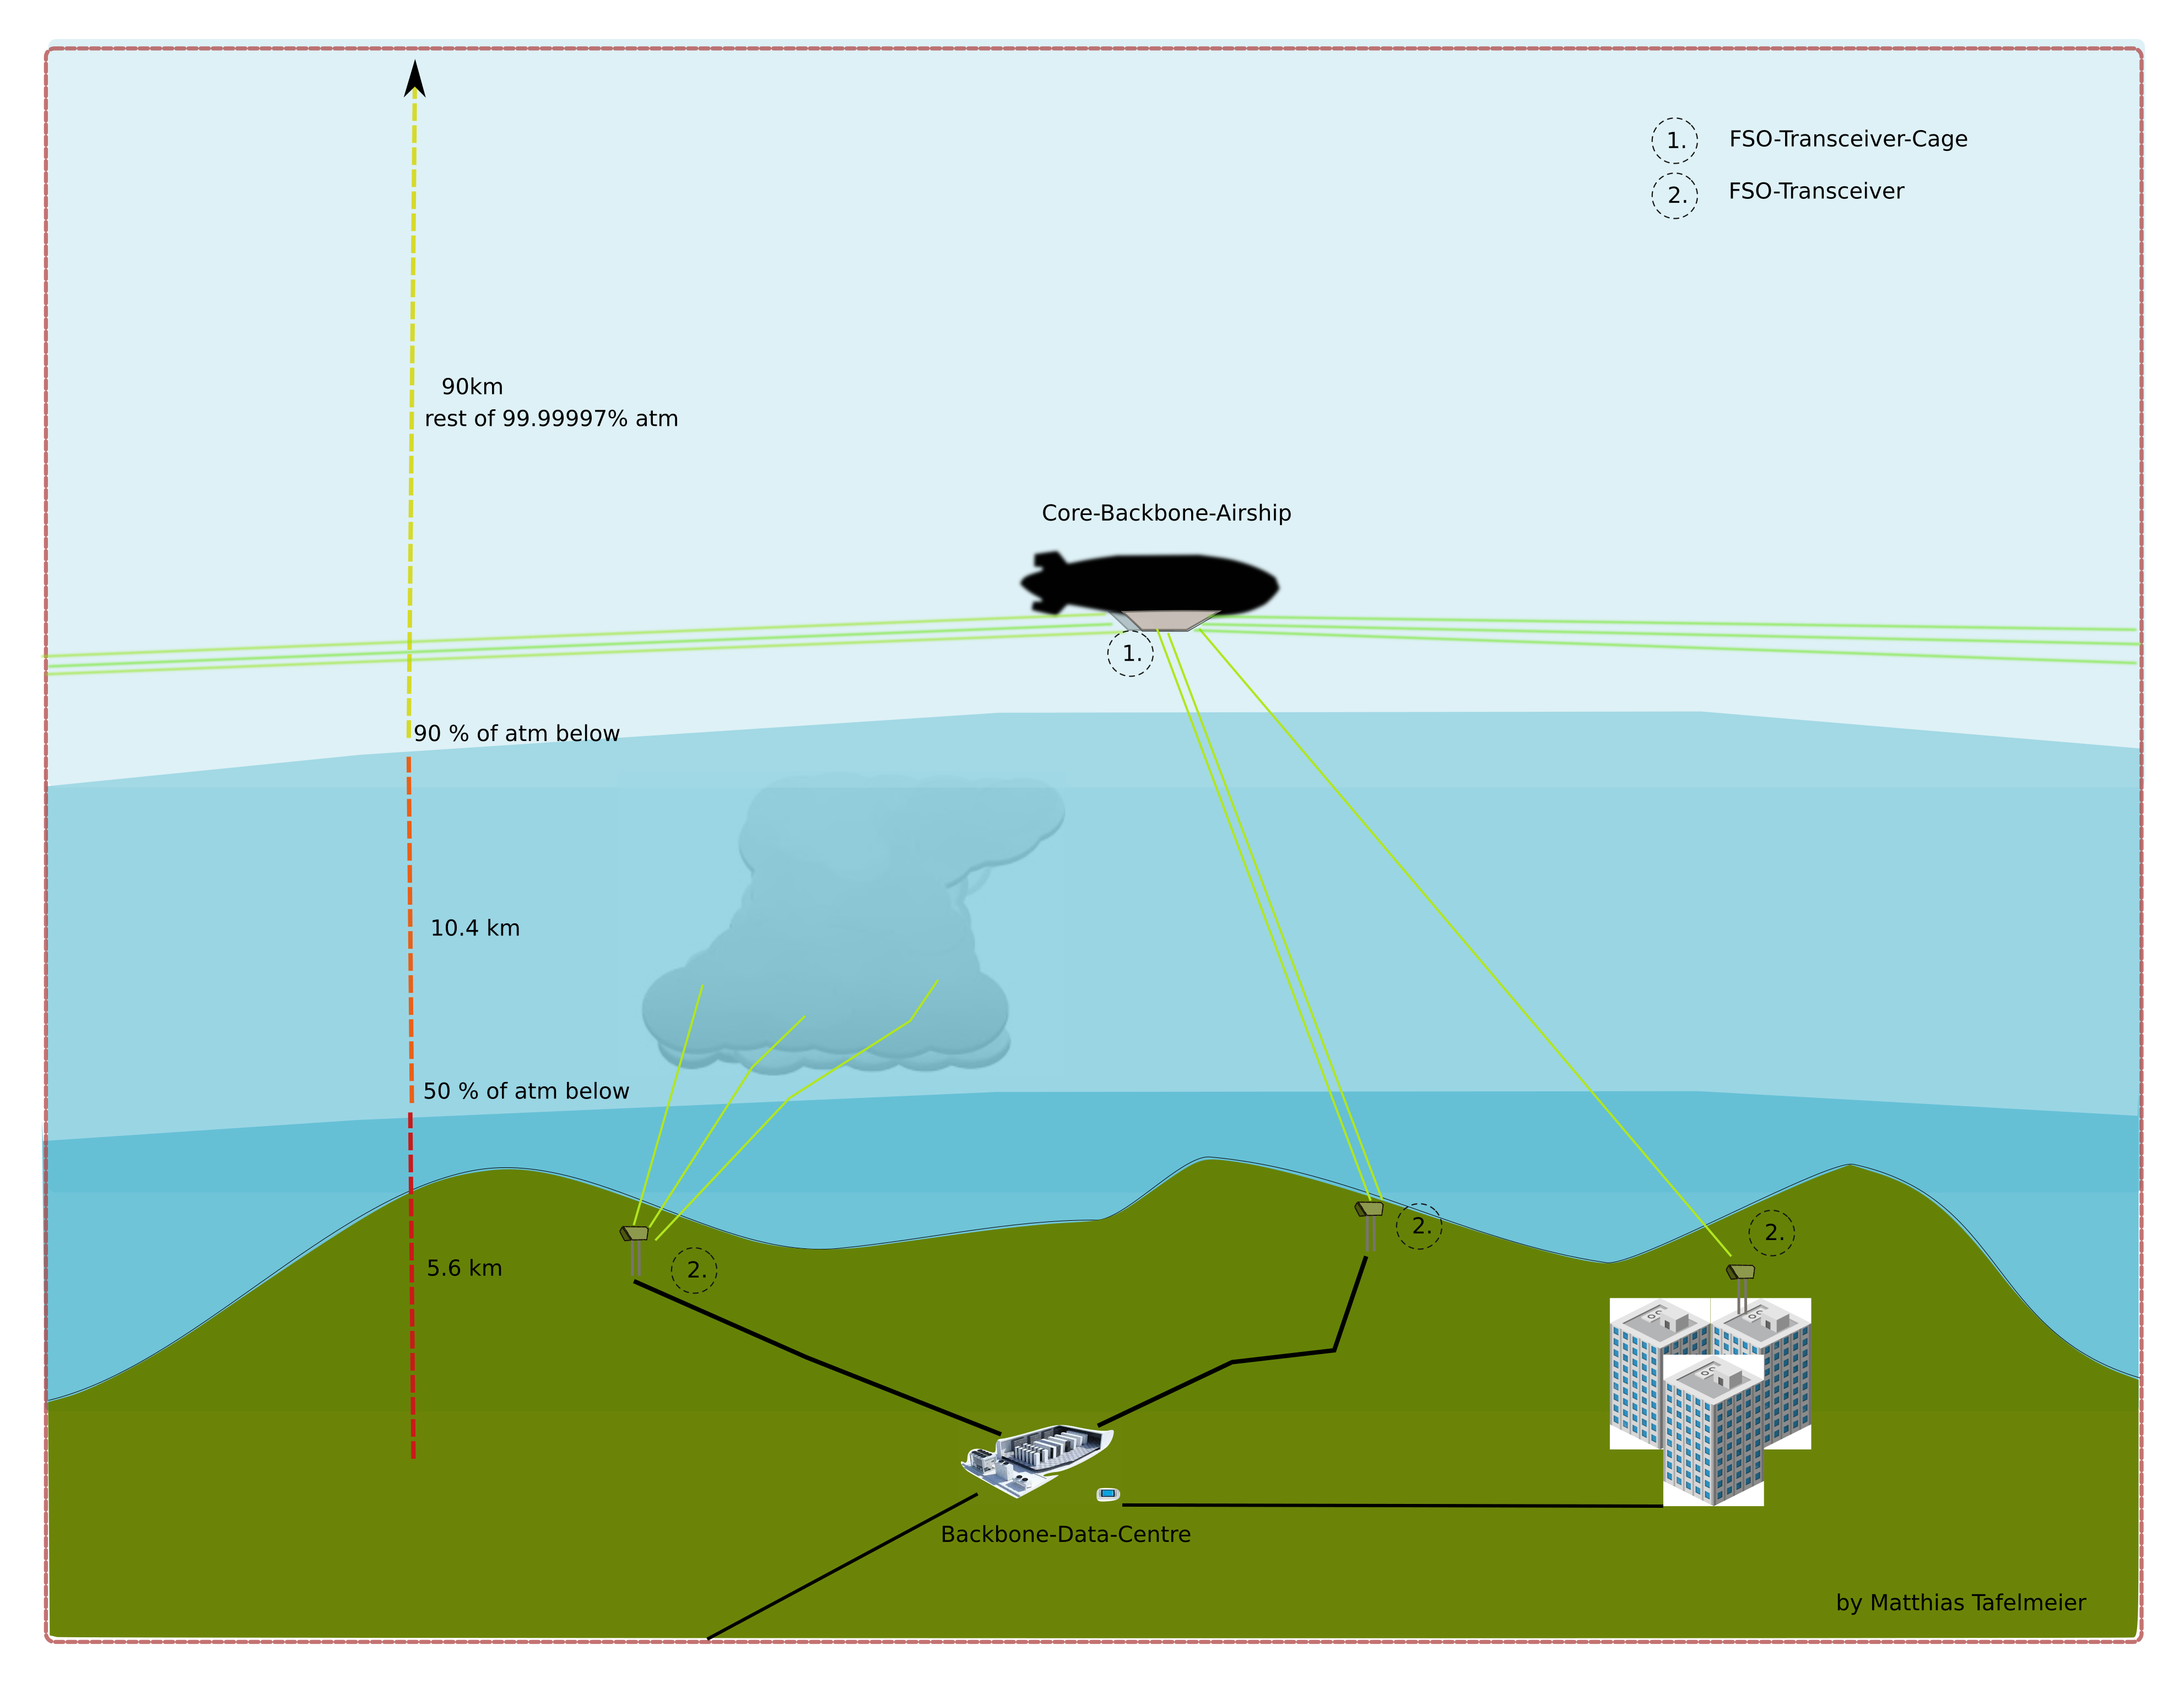 FSO Airborne Backbone Principle in Atmospheric Layering